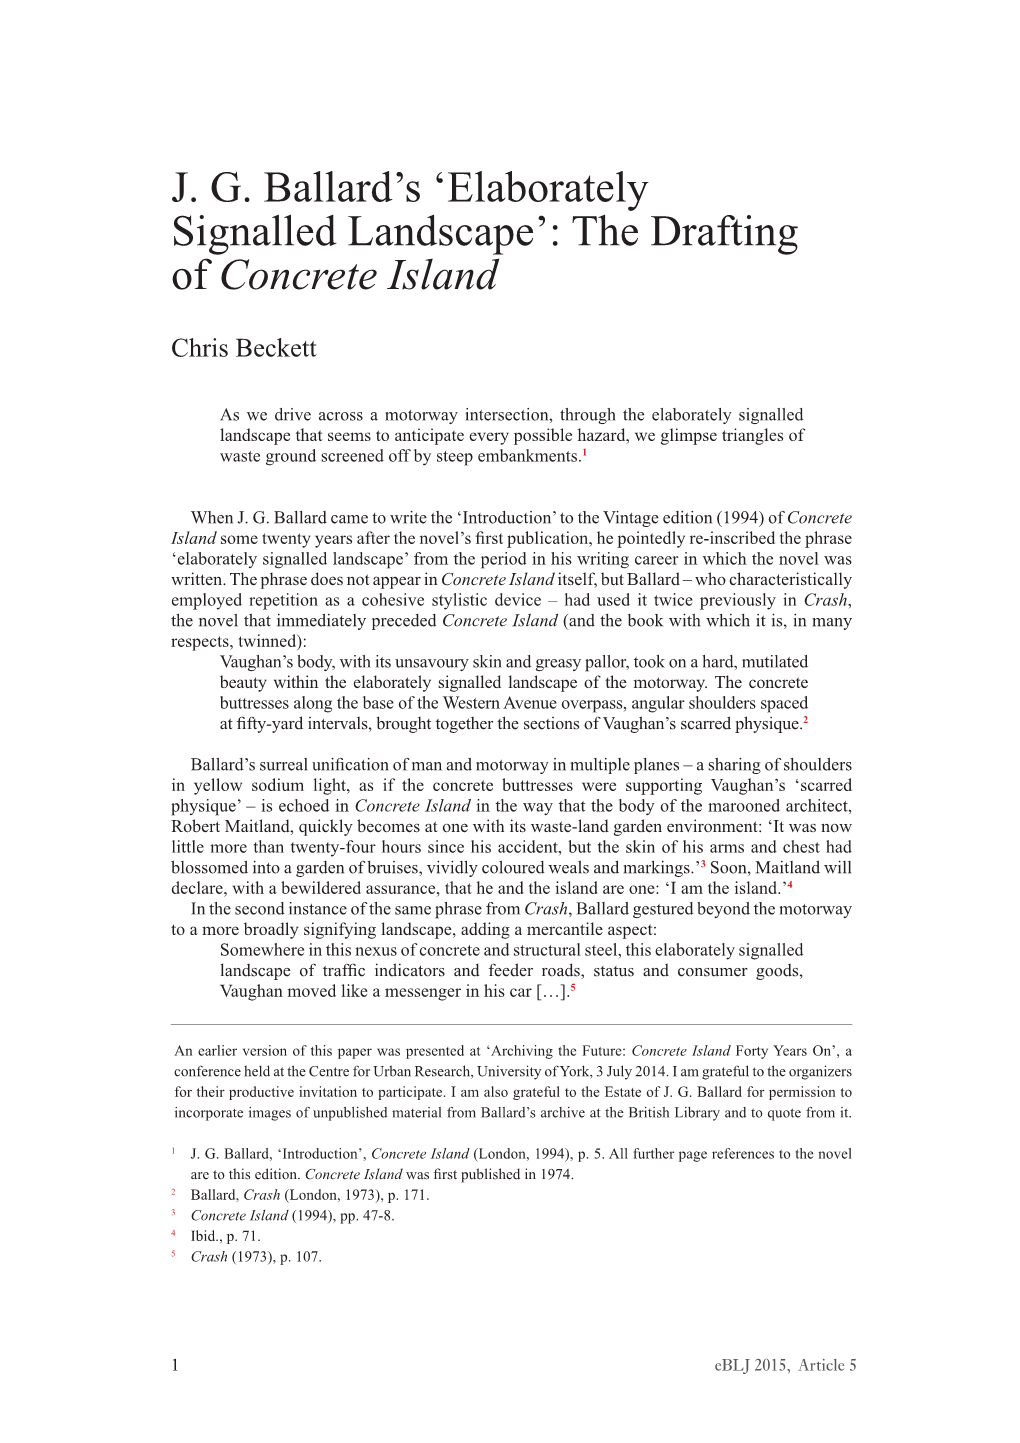 J. G. Ballard's 'Elaborately Signalled Landscape': the Drafting of Concrete Island